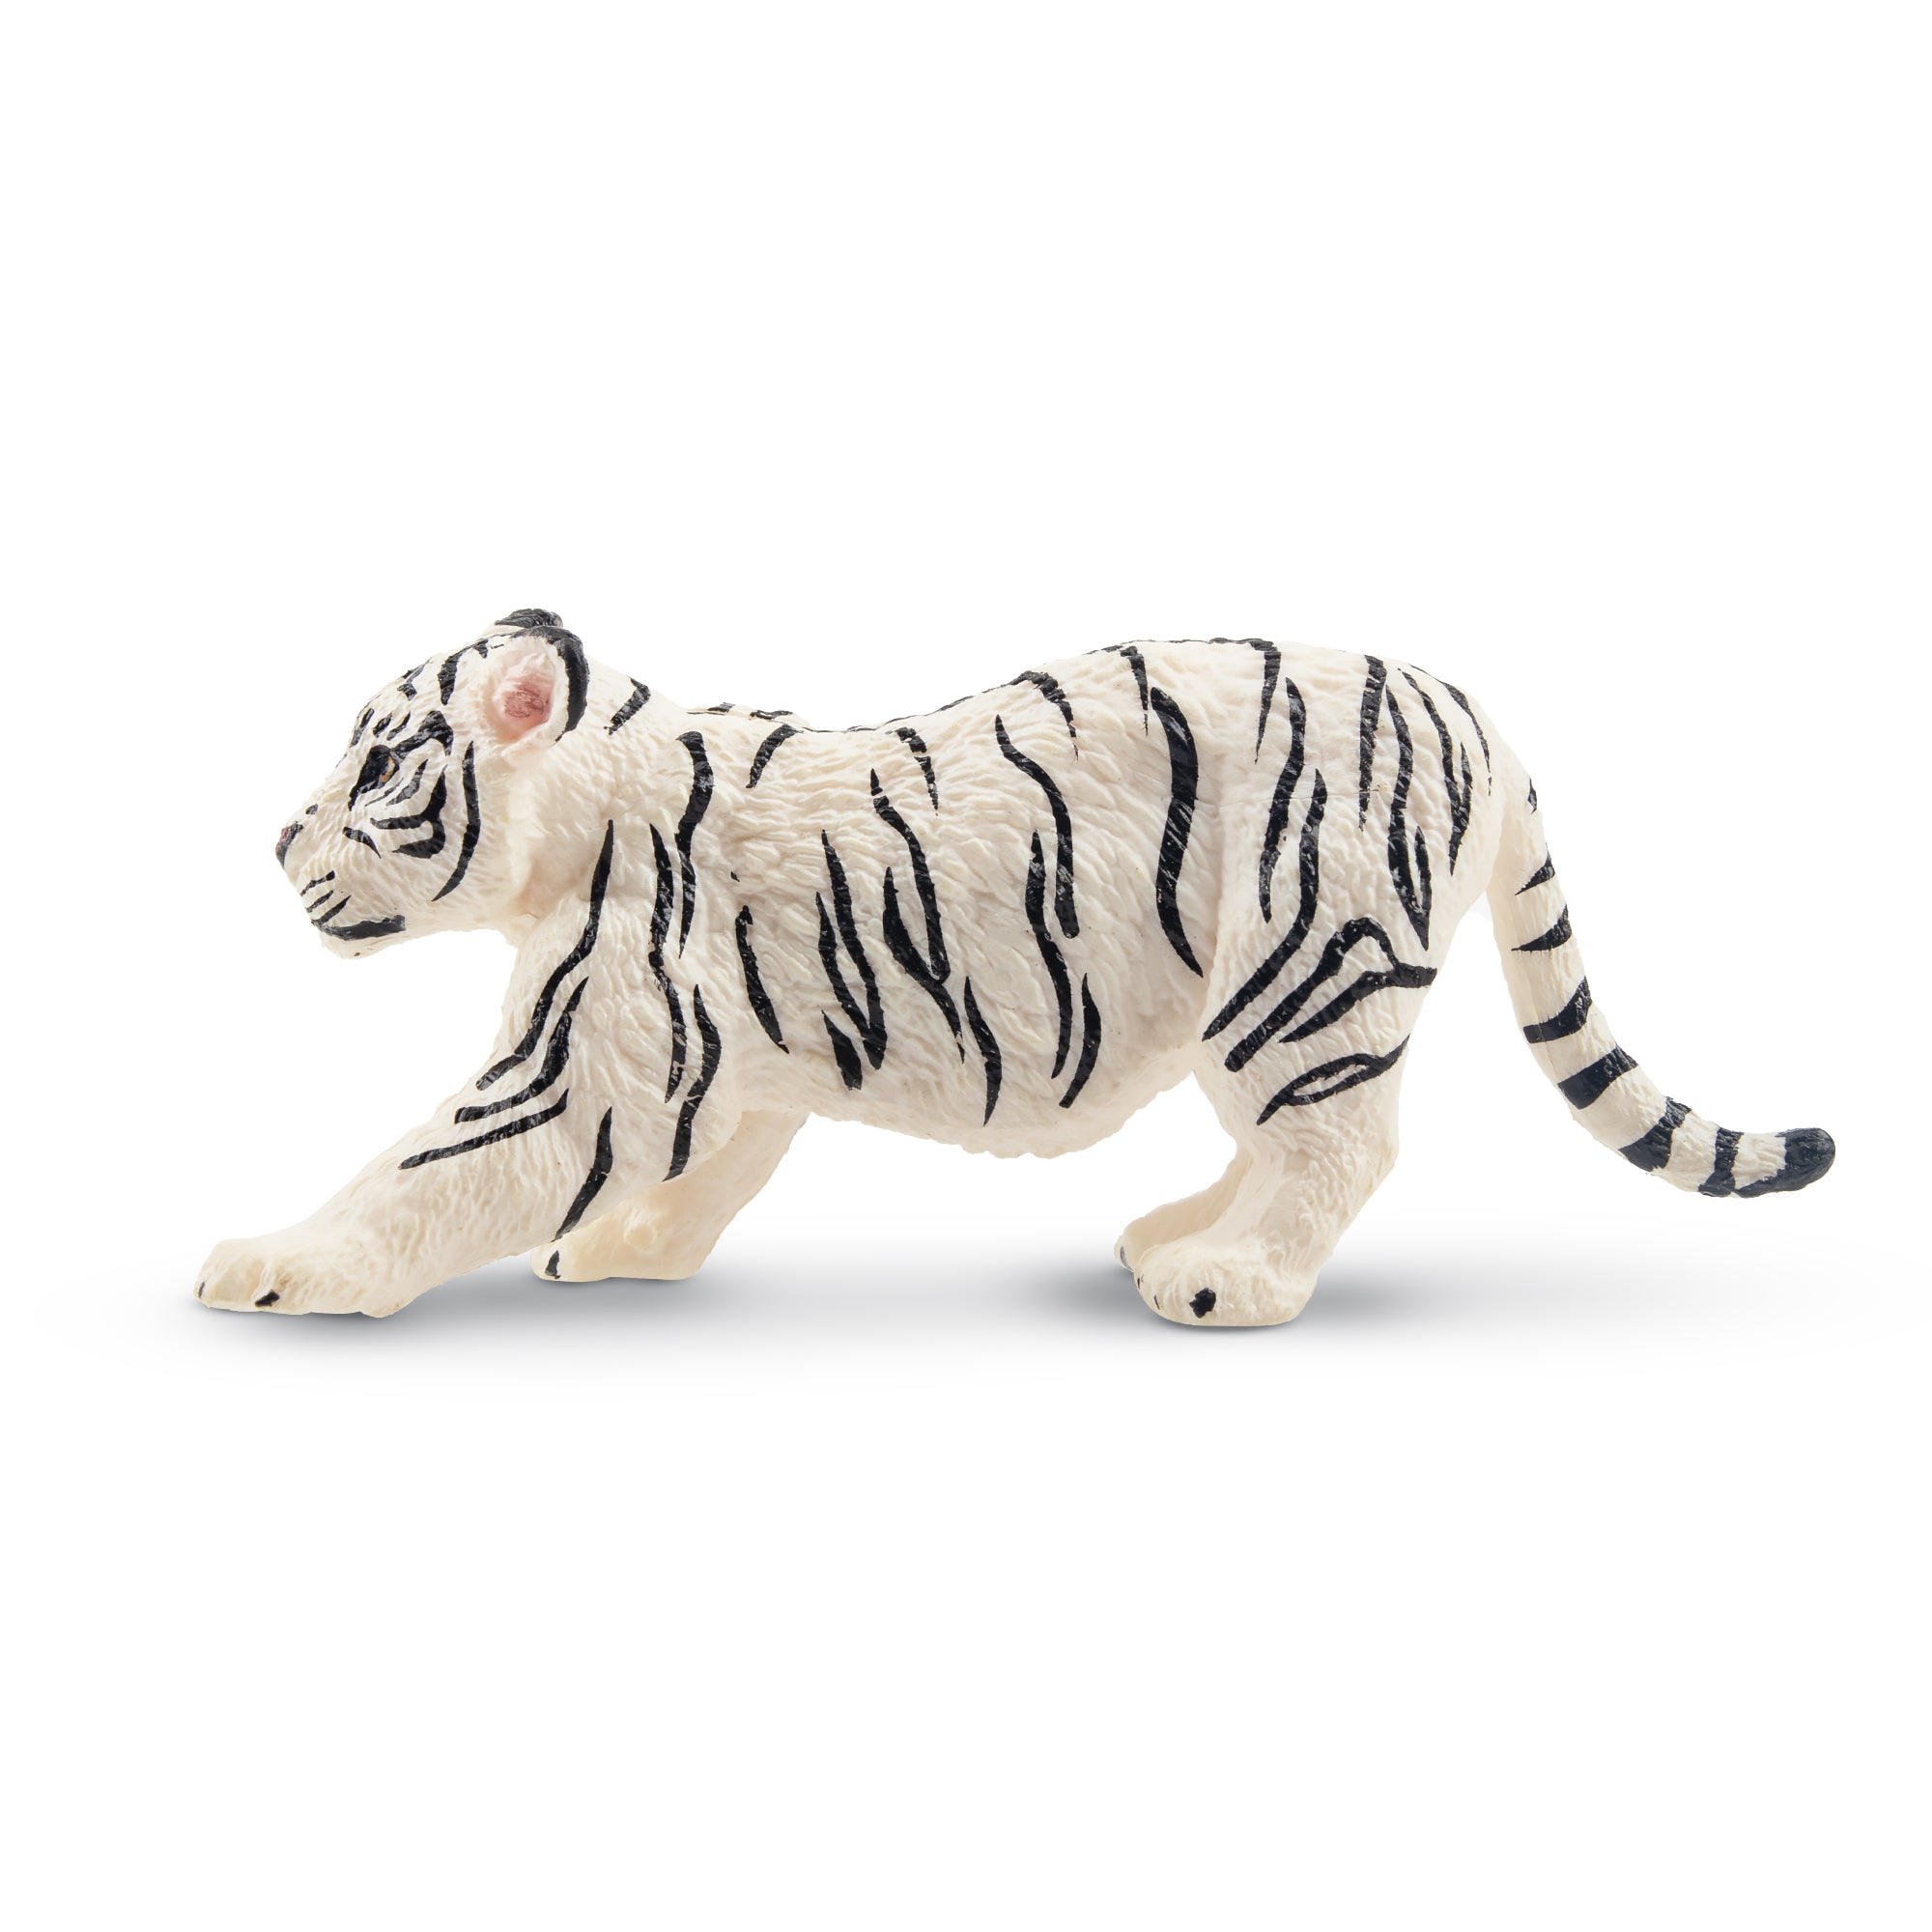 Toymany Hunting White Tiger Cub Figurine Toy